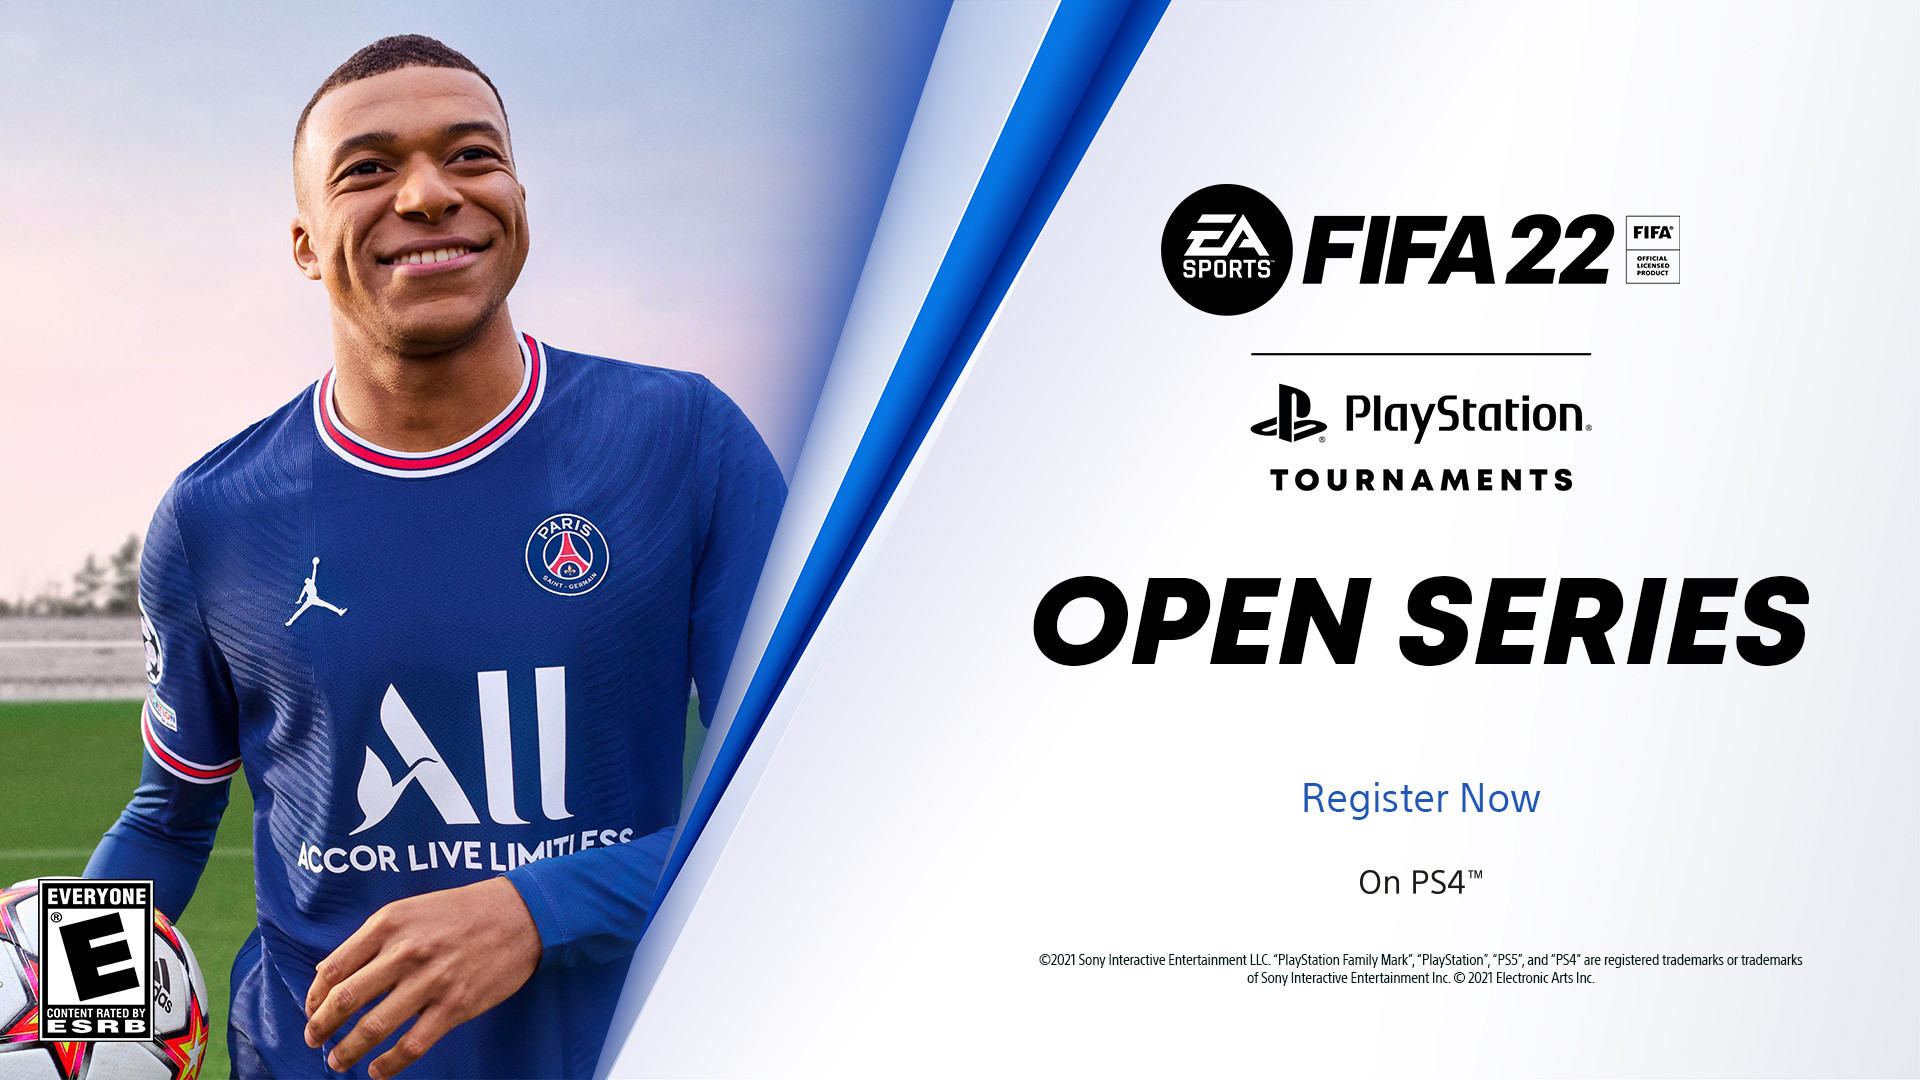 FIFA 22 FUT PlayStation Tournaments, Open Series